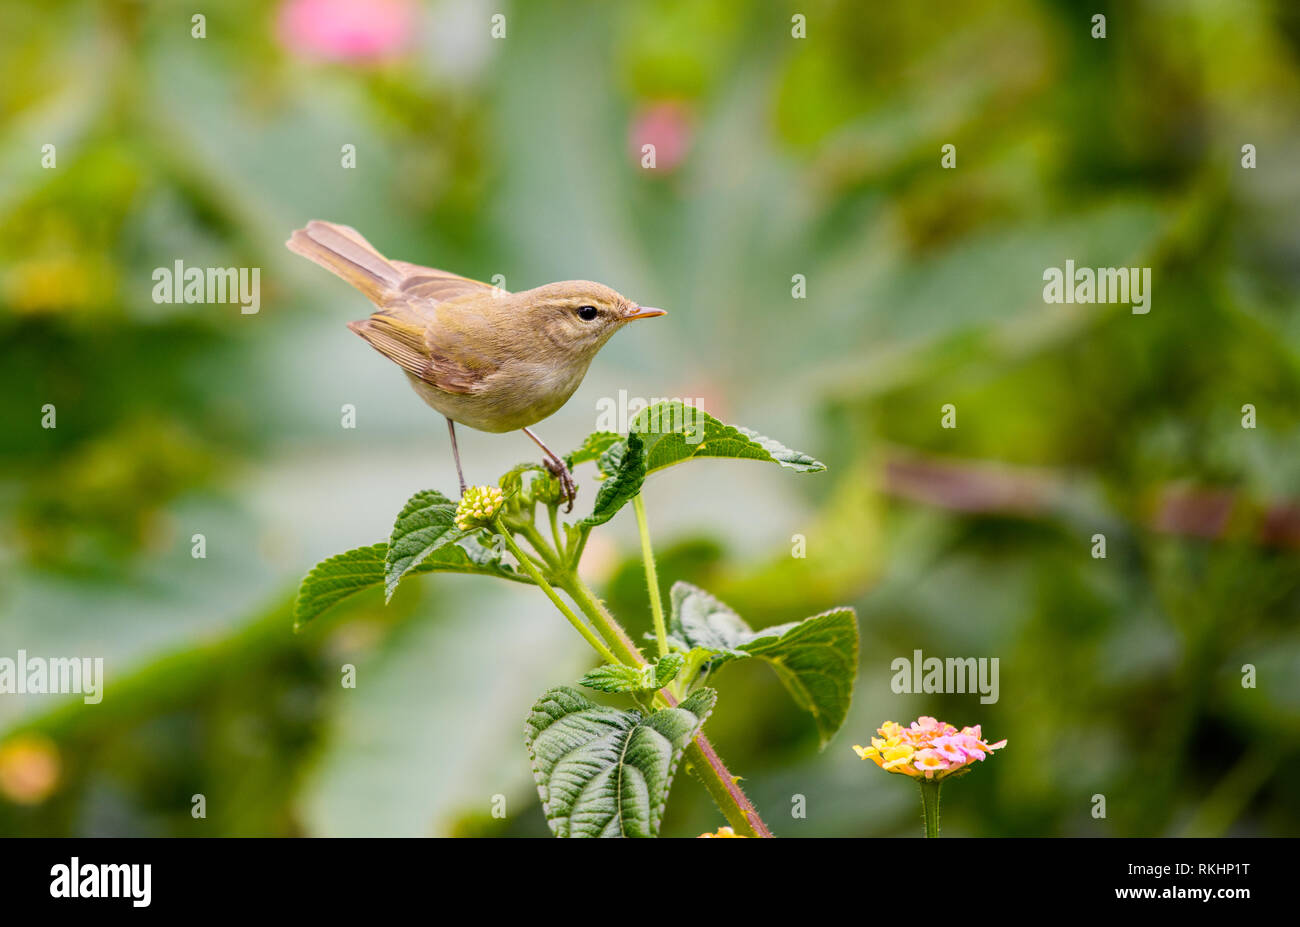 Enchanting shot of a small bird perching on green branch Stock Photo